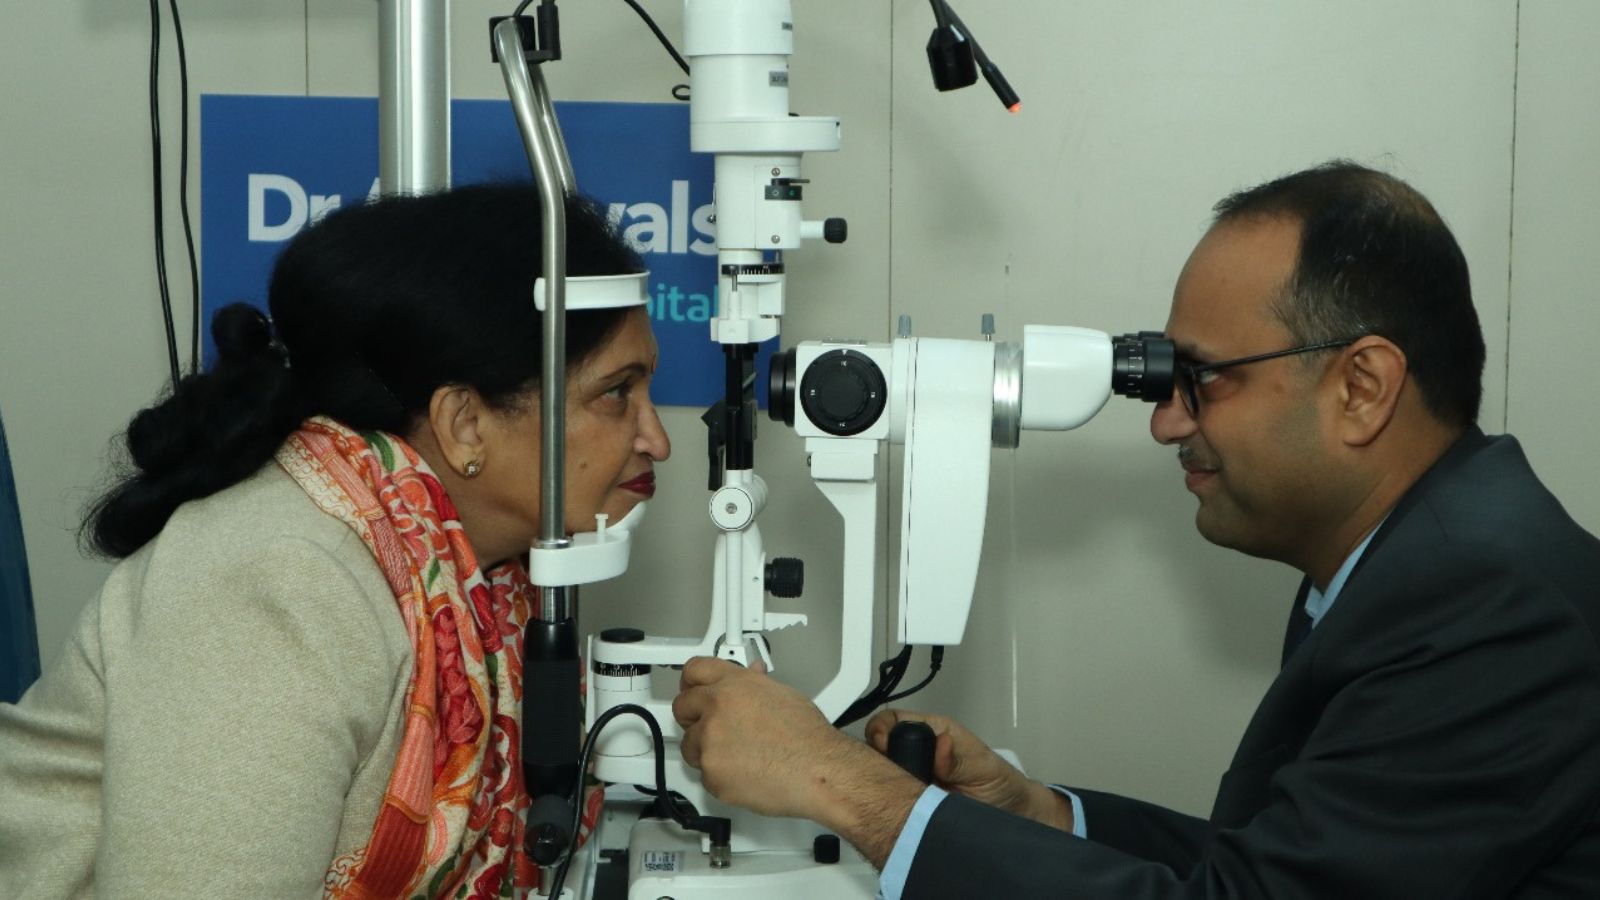 Eye Hospital: চোখের আধুনিক চিকিৎসার ঠিকানা এবার শহর কলকাতায়, সল্টলেকে উদ্বোধন হল ডক্টর আগরওয়াল গ্রুপ অফ আই হসপিটালসের 'কাটিং এজ আই ফেসিলিটি